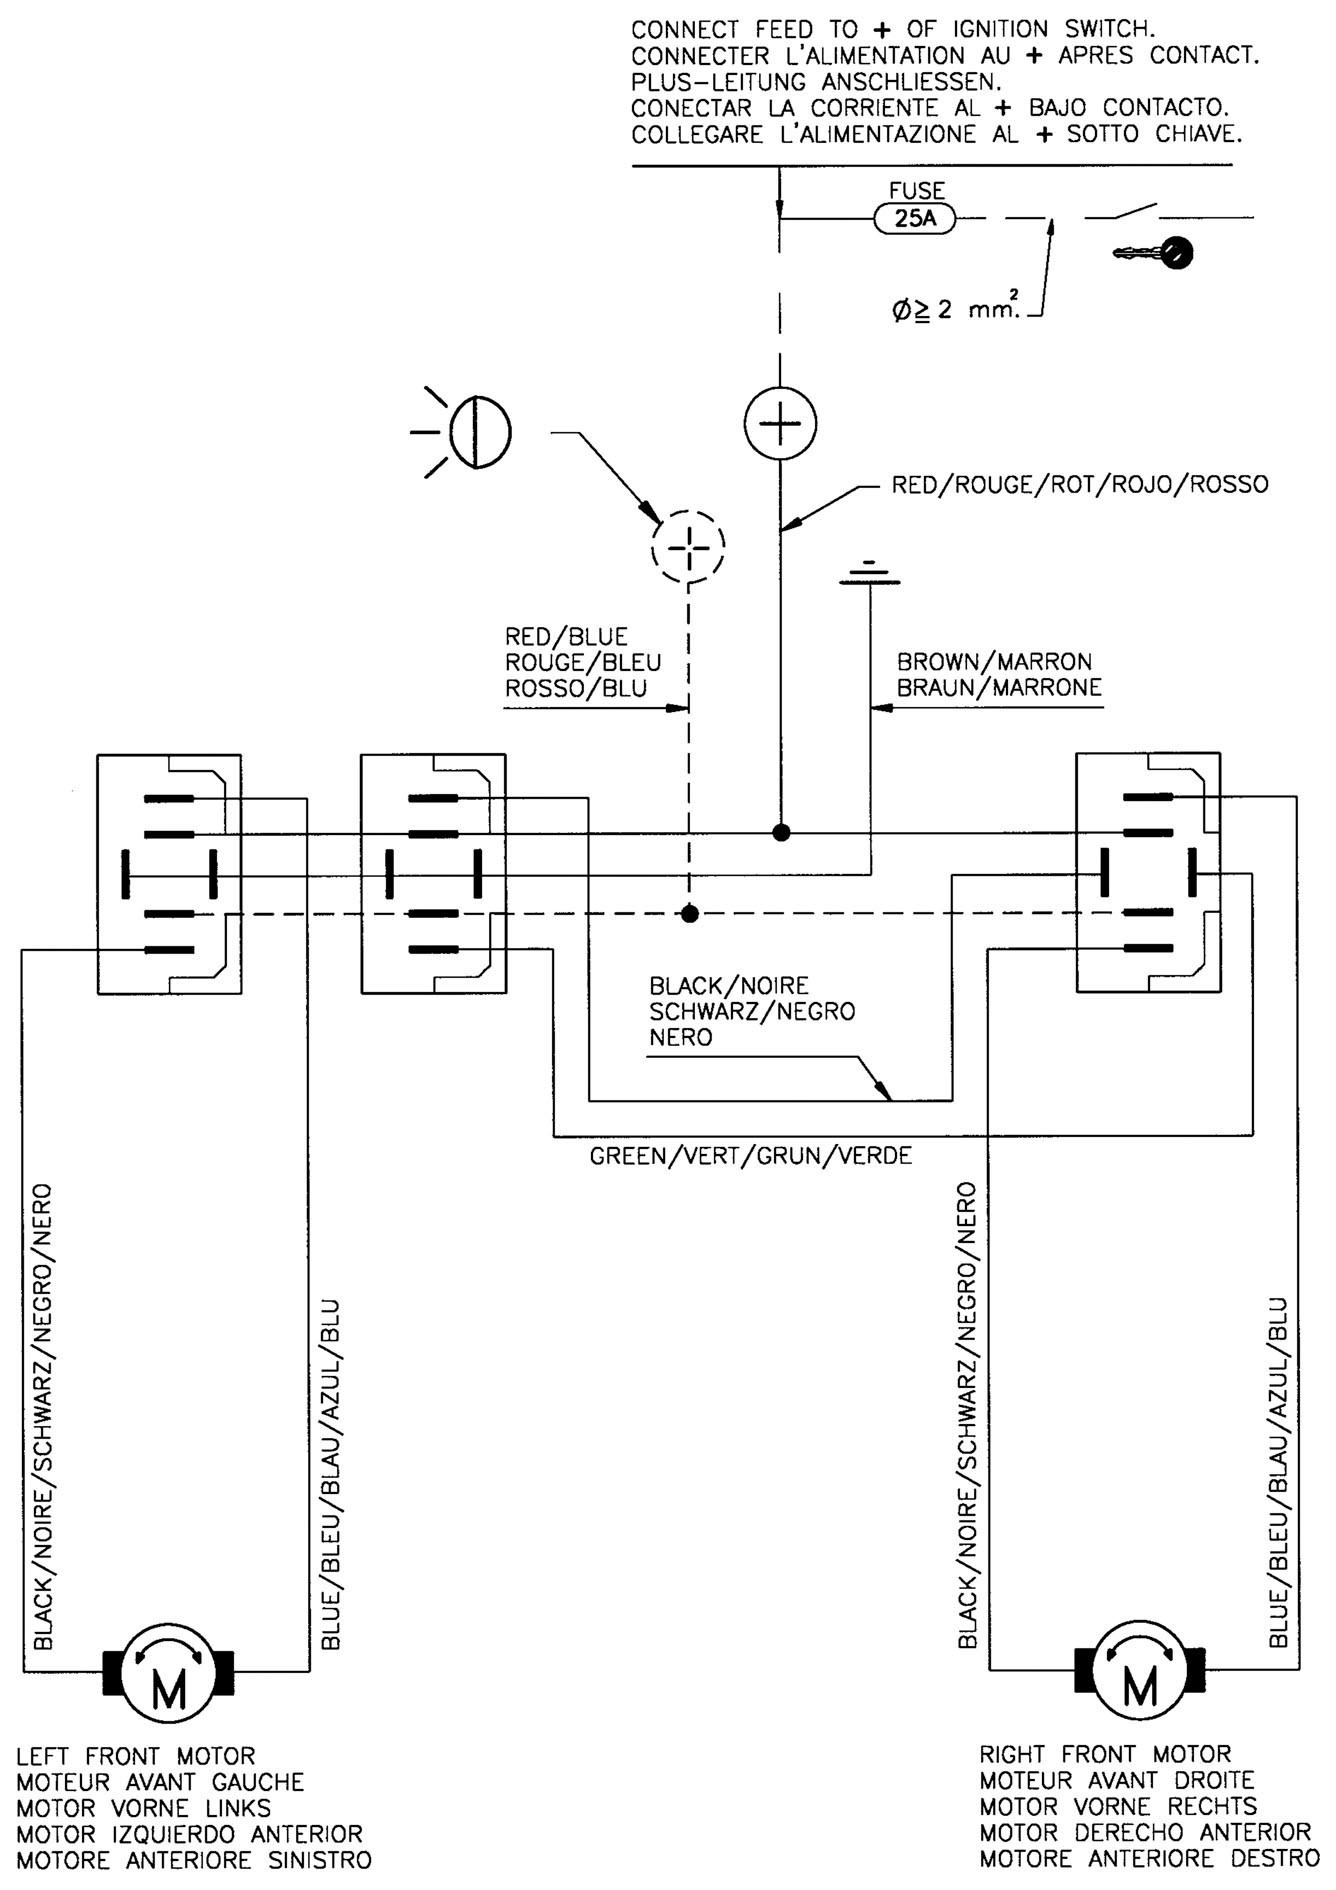 Universal Power Window Switch Wiring Diagram Category Wiring Diagram 142 Of Universal Power Window Switch Wiring Diagram